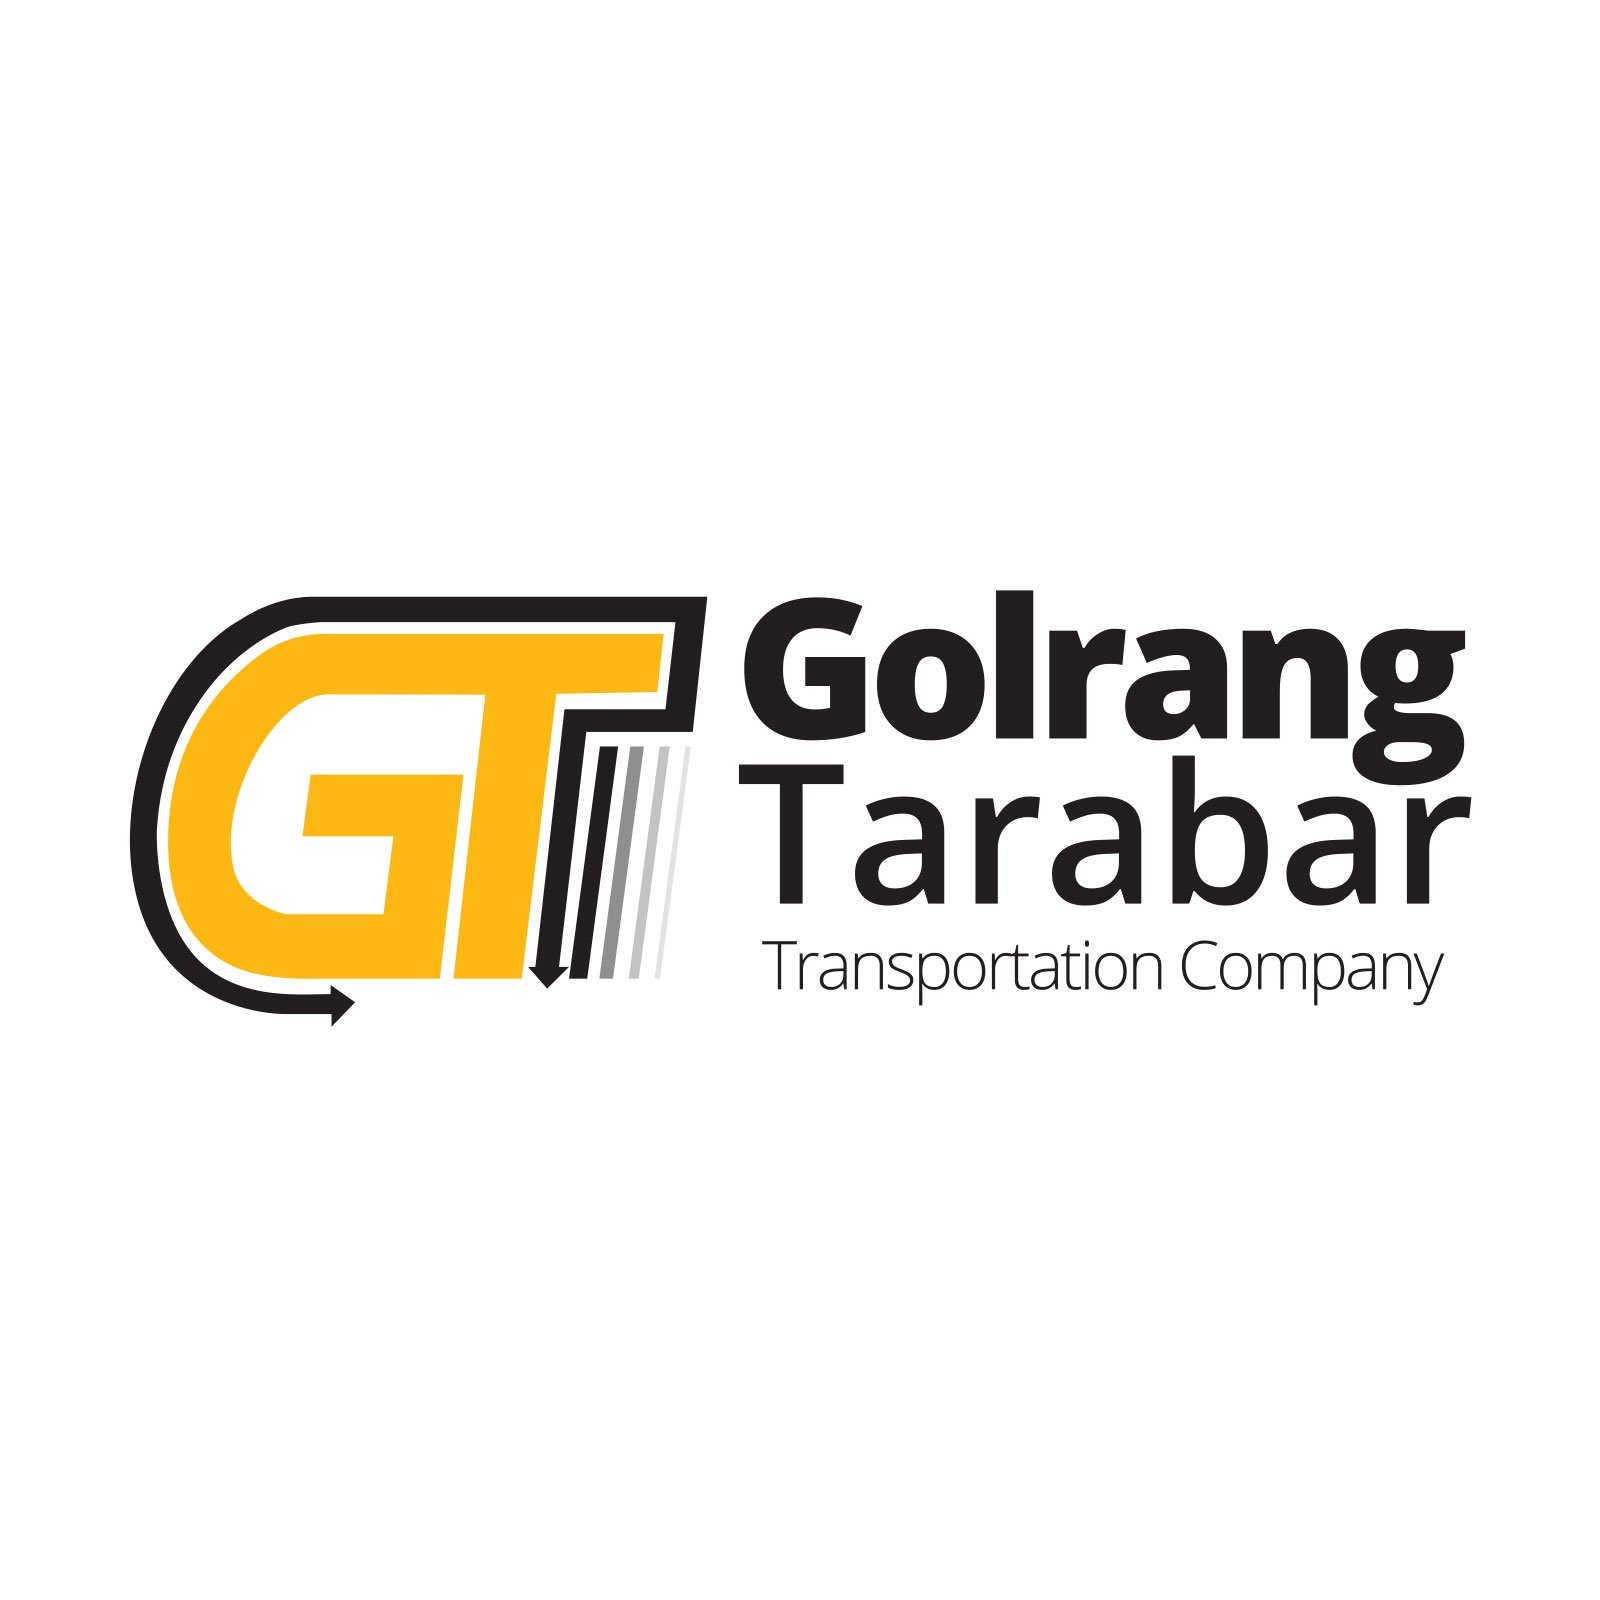 کارشناس بازرگانی | Commercial Expert - حمل و نقل گلرنگ ترابر | Golrang Tarabar Transportation